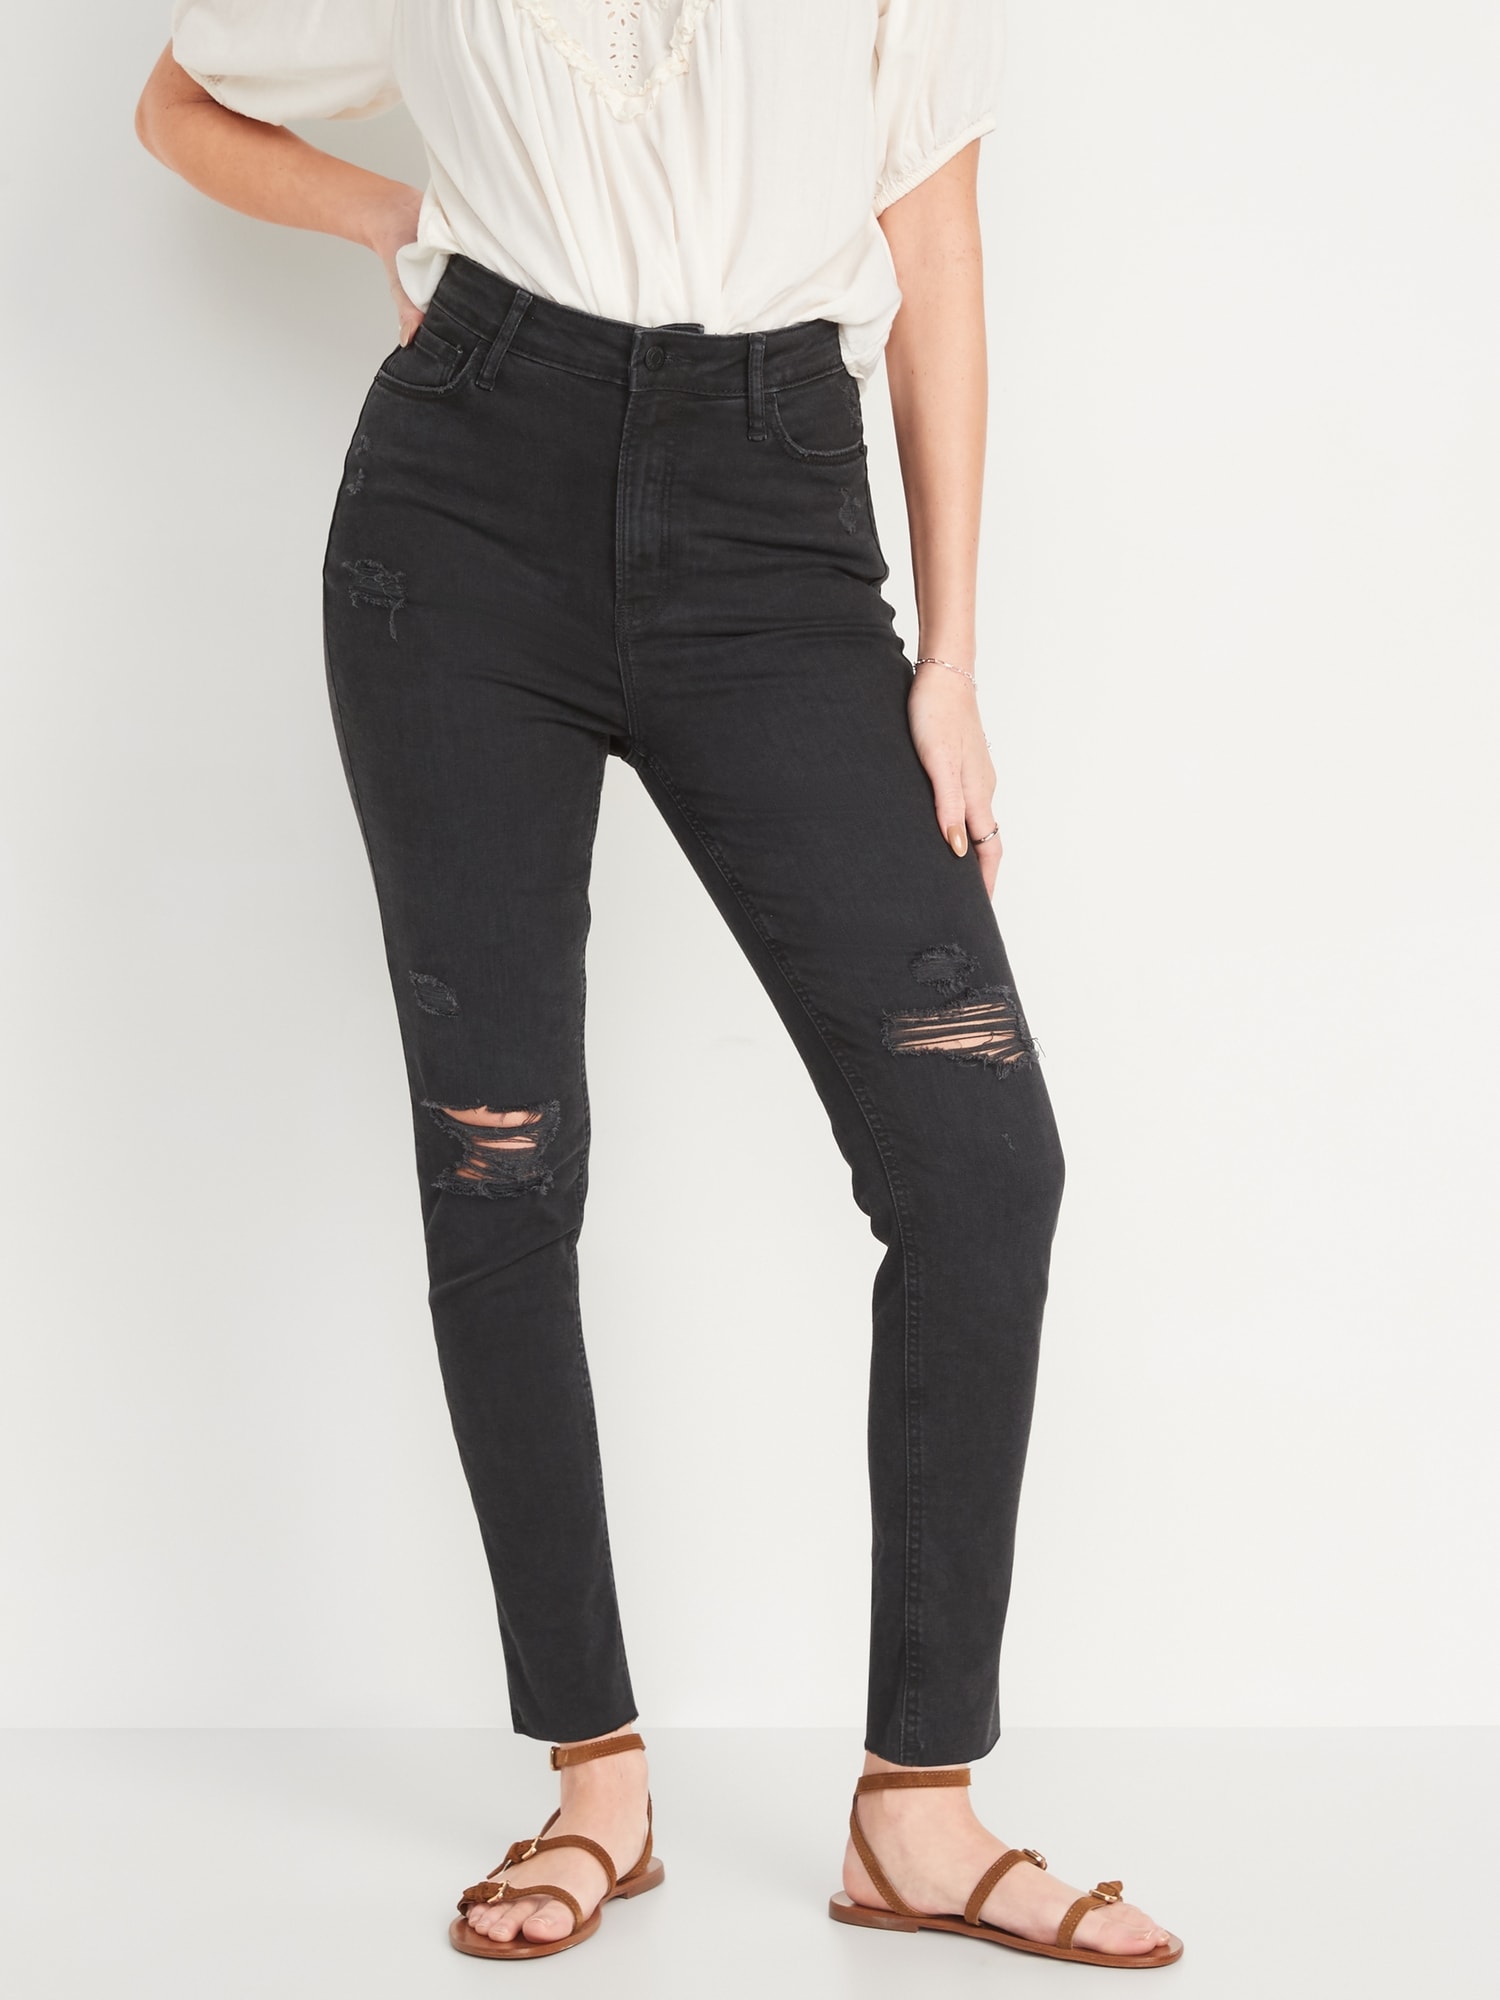 Til sandheden Lilla Styrke FitsYou 3-Sizes-in-1 Extra High-Waisted Rockstar Super-Skinny Ripped Jeans  for Women | Old Navy